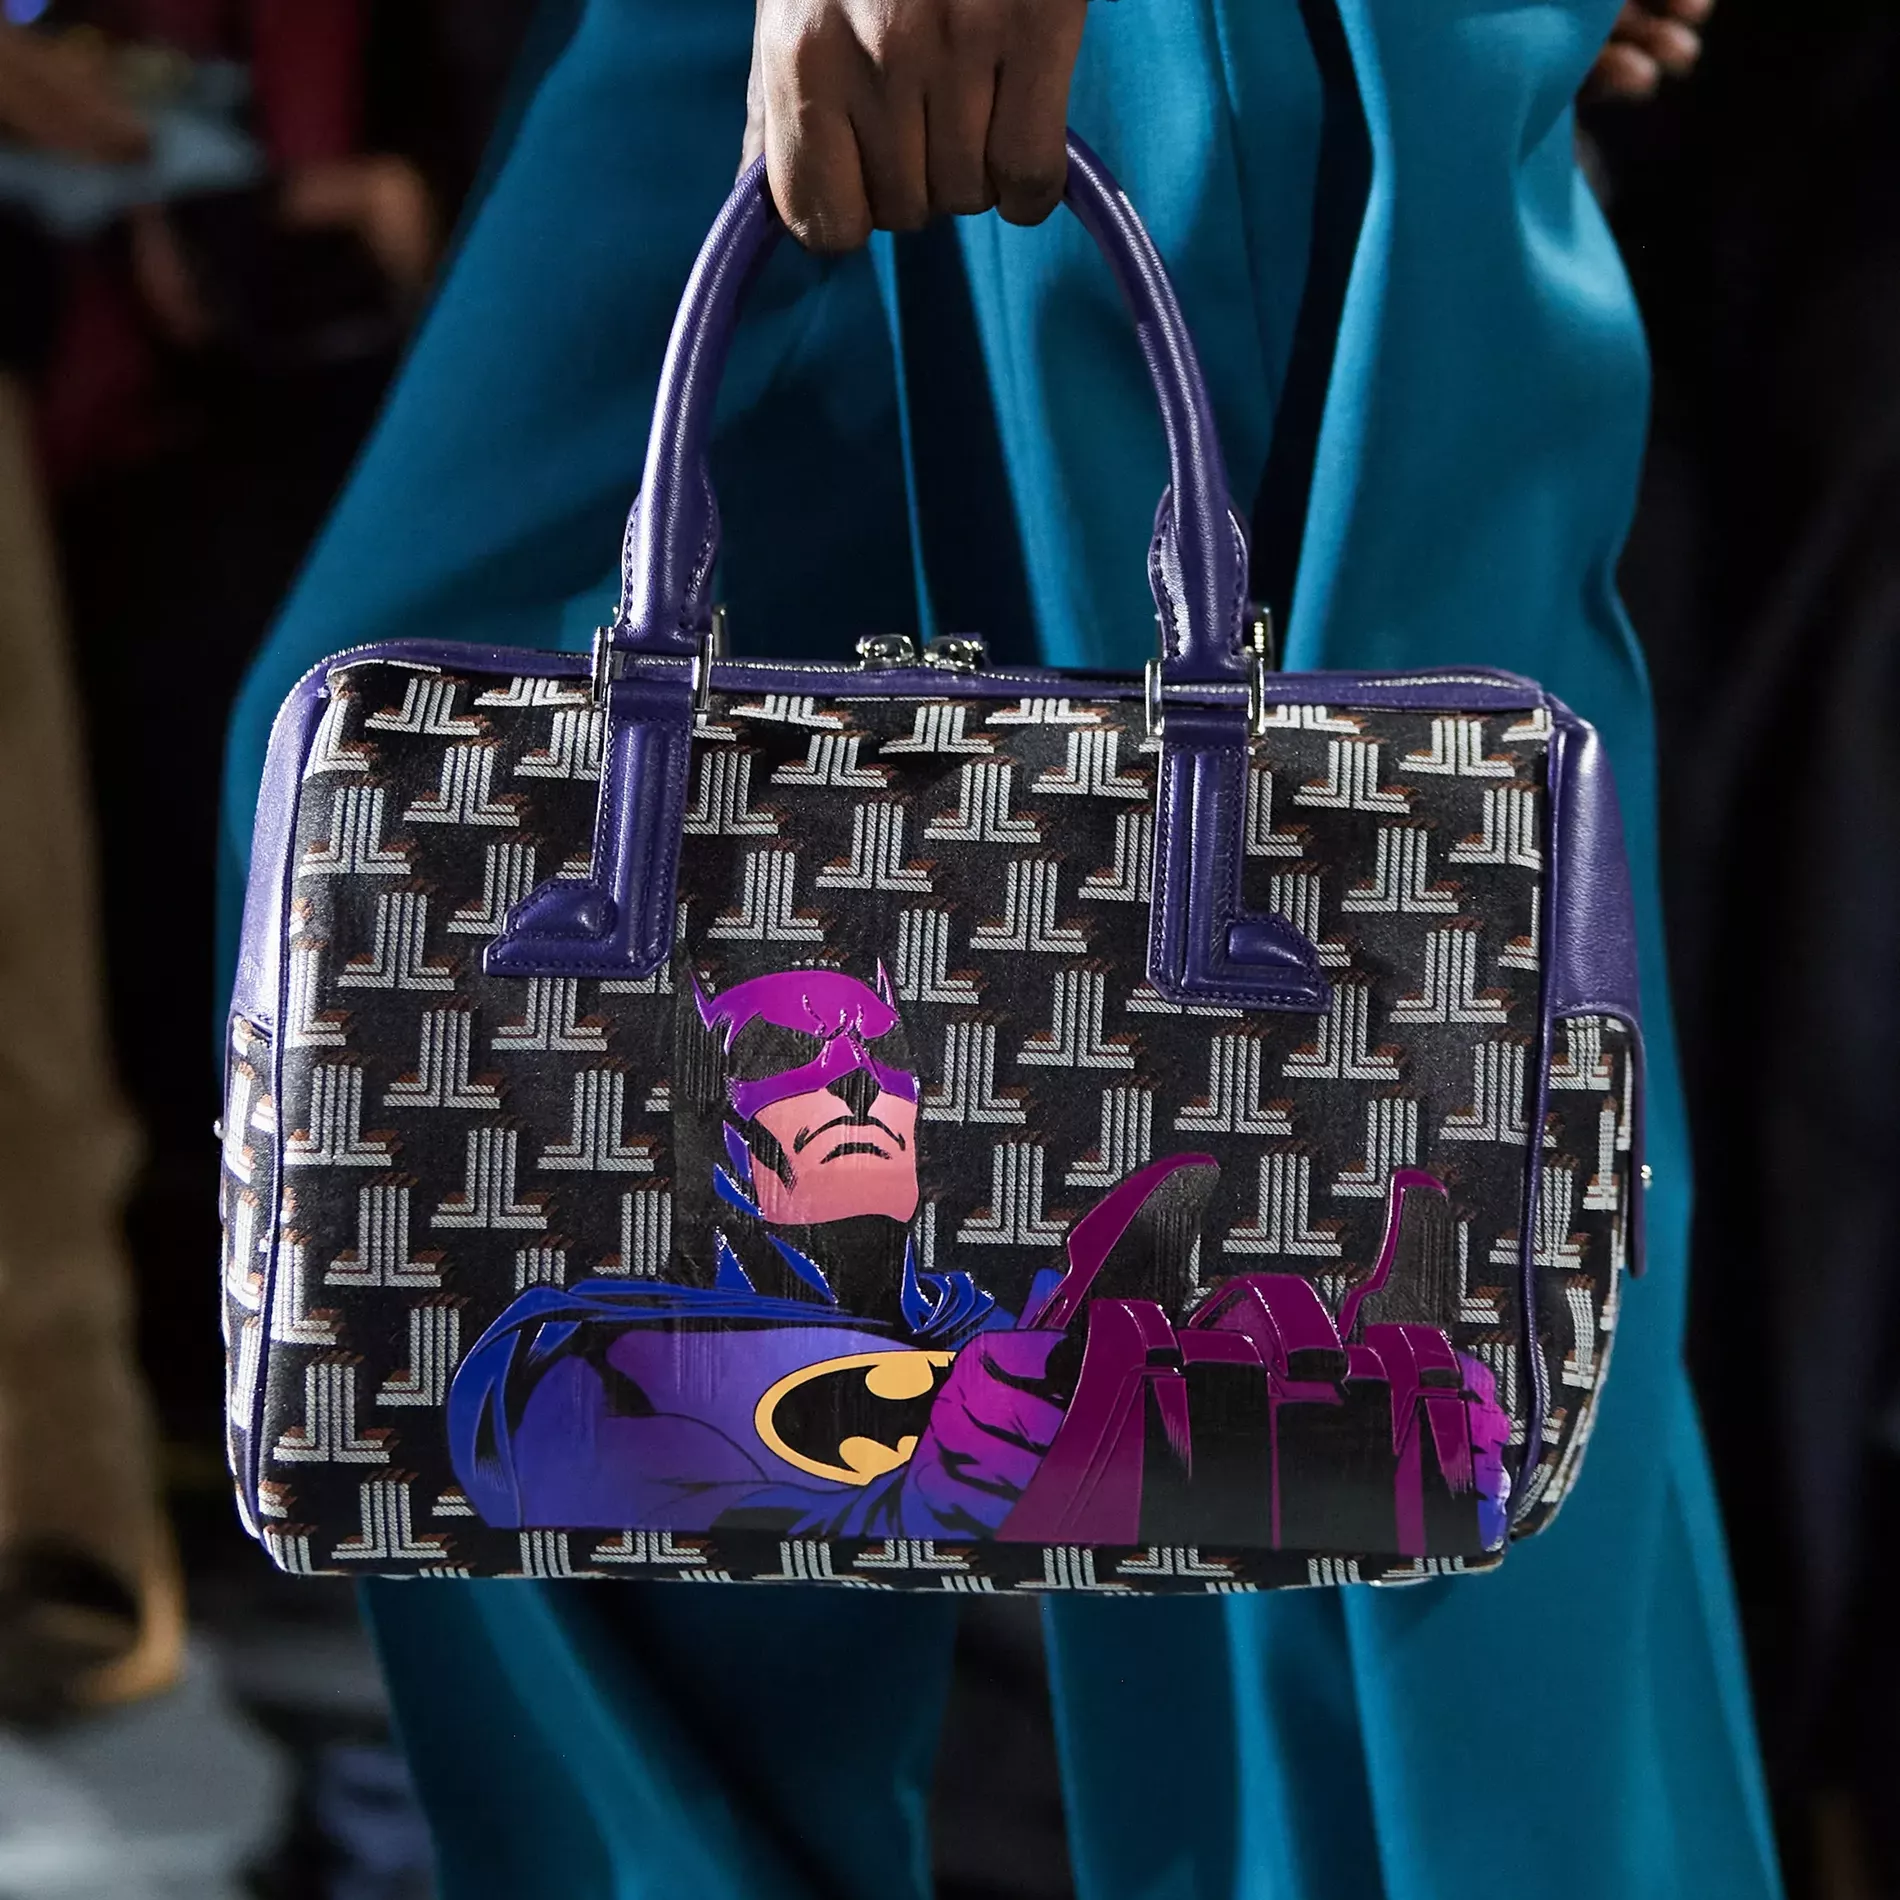 Lanvin bag with monogramed canvas and Batman illustration